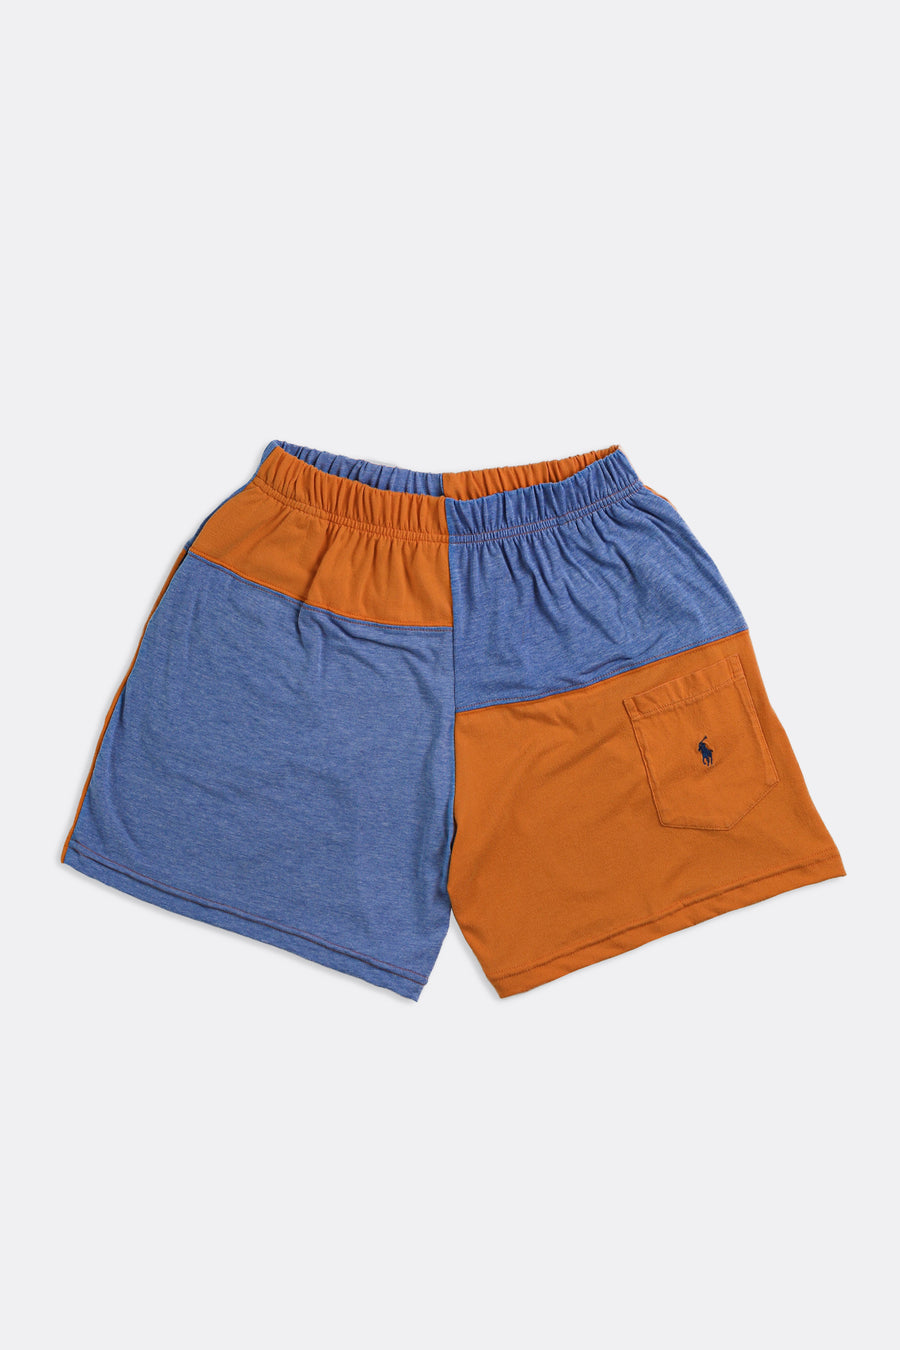 Unisex Rework Polo Patchwork Tee Shorts - S